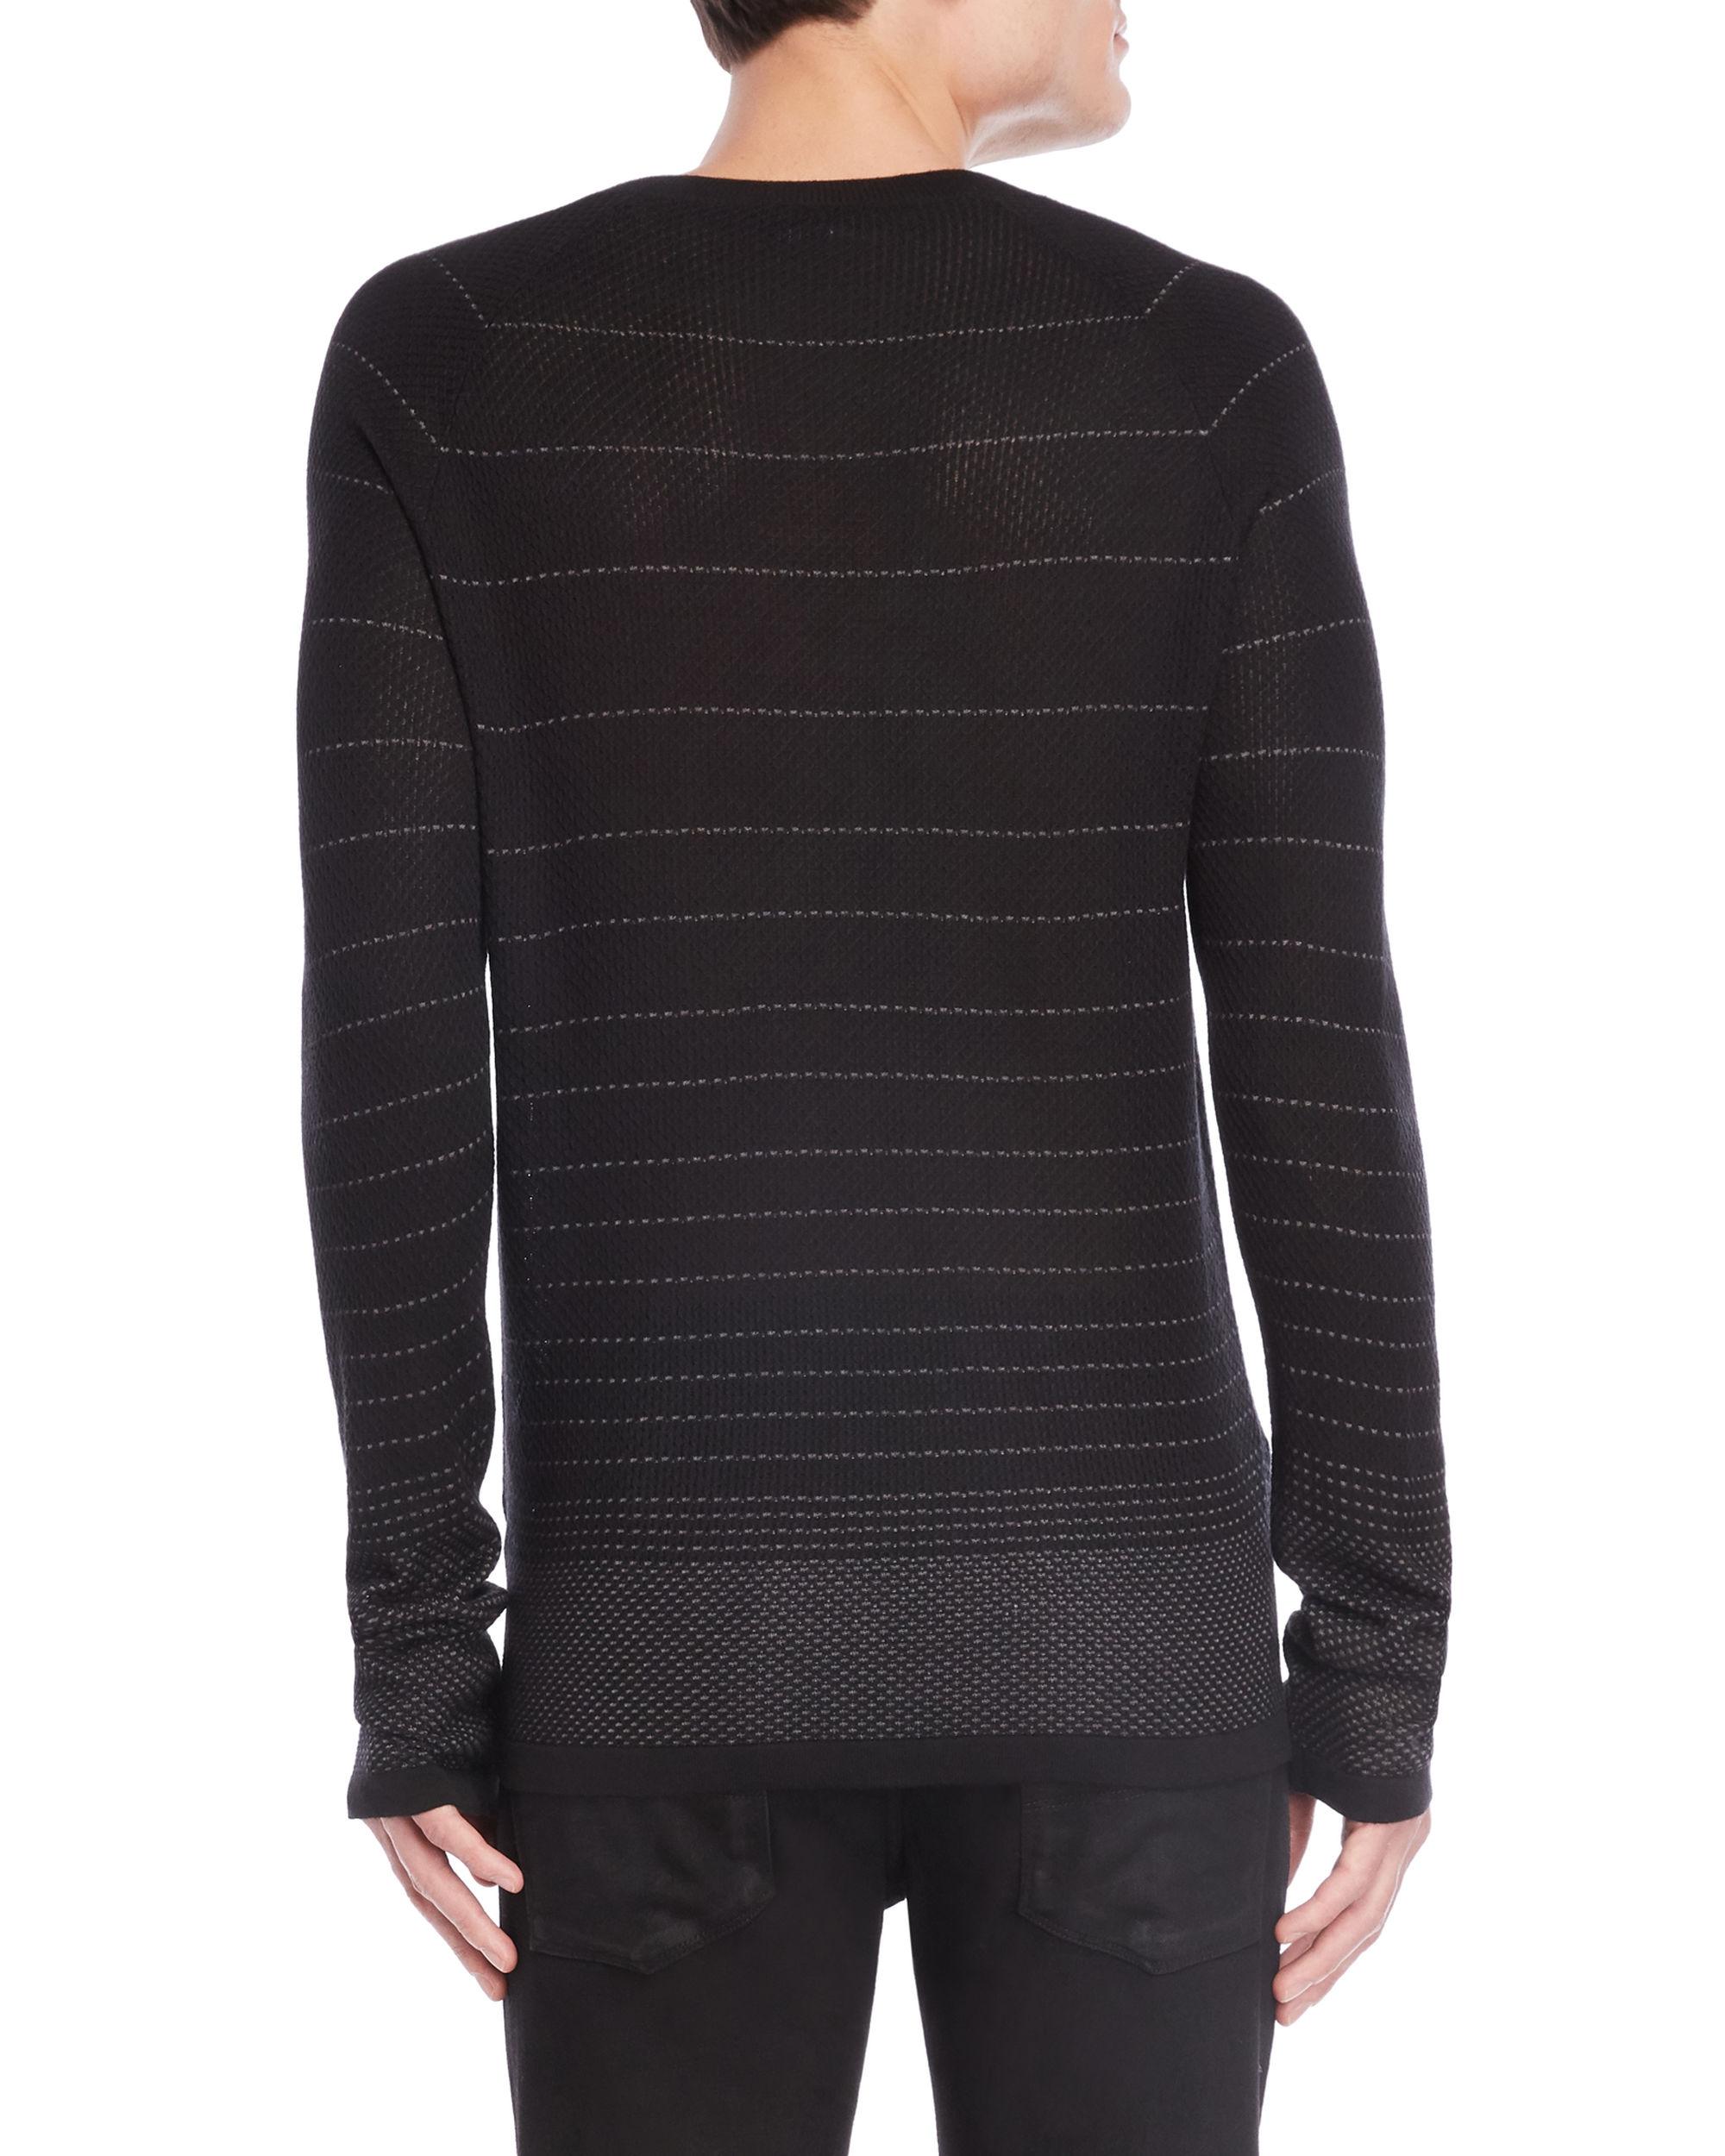 Emporio Armani Synthetic Black Stripe Sweater for Men - Lyst